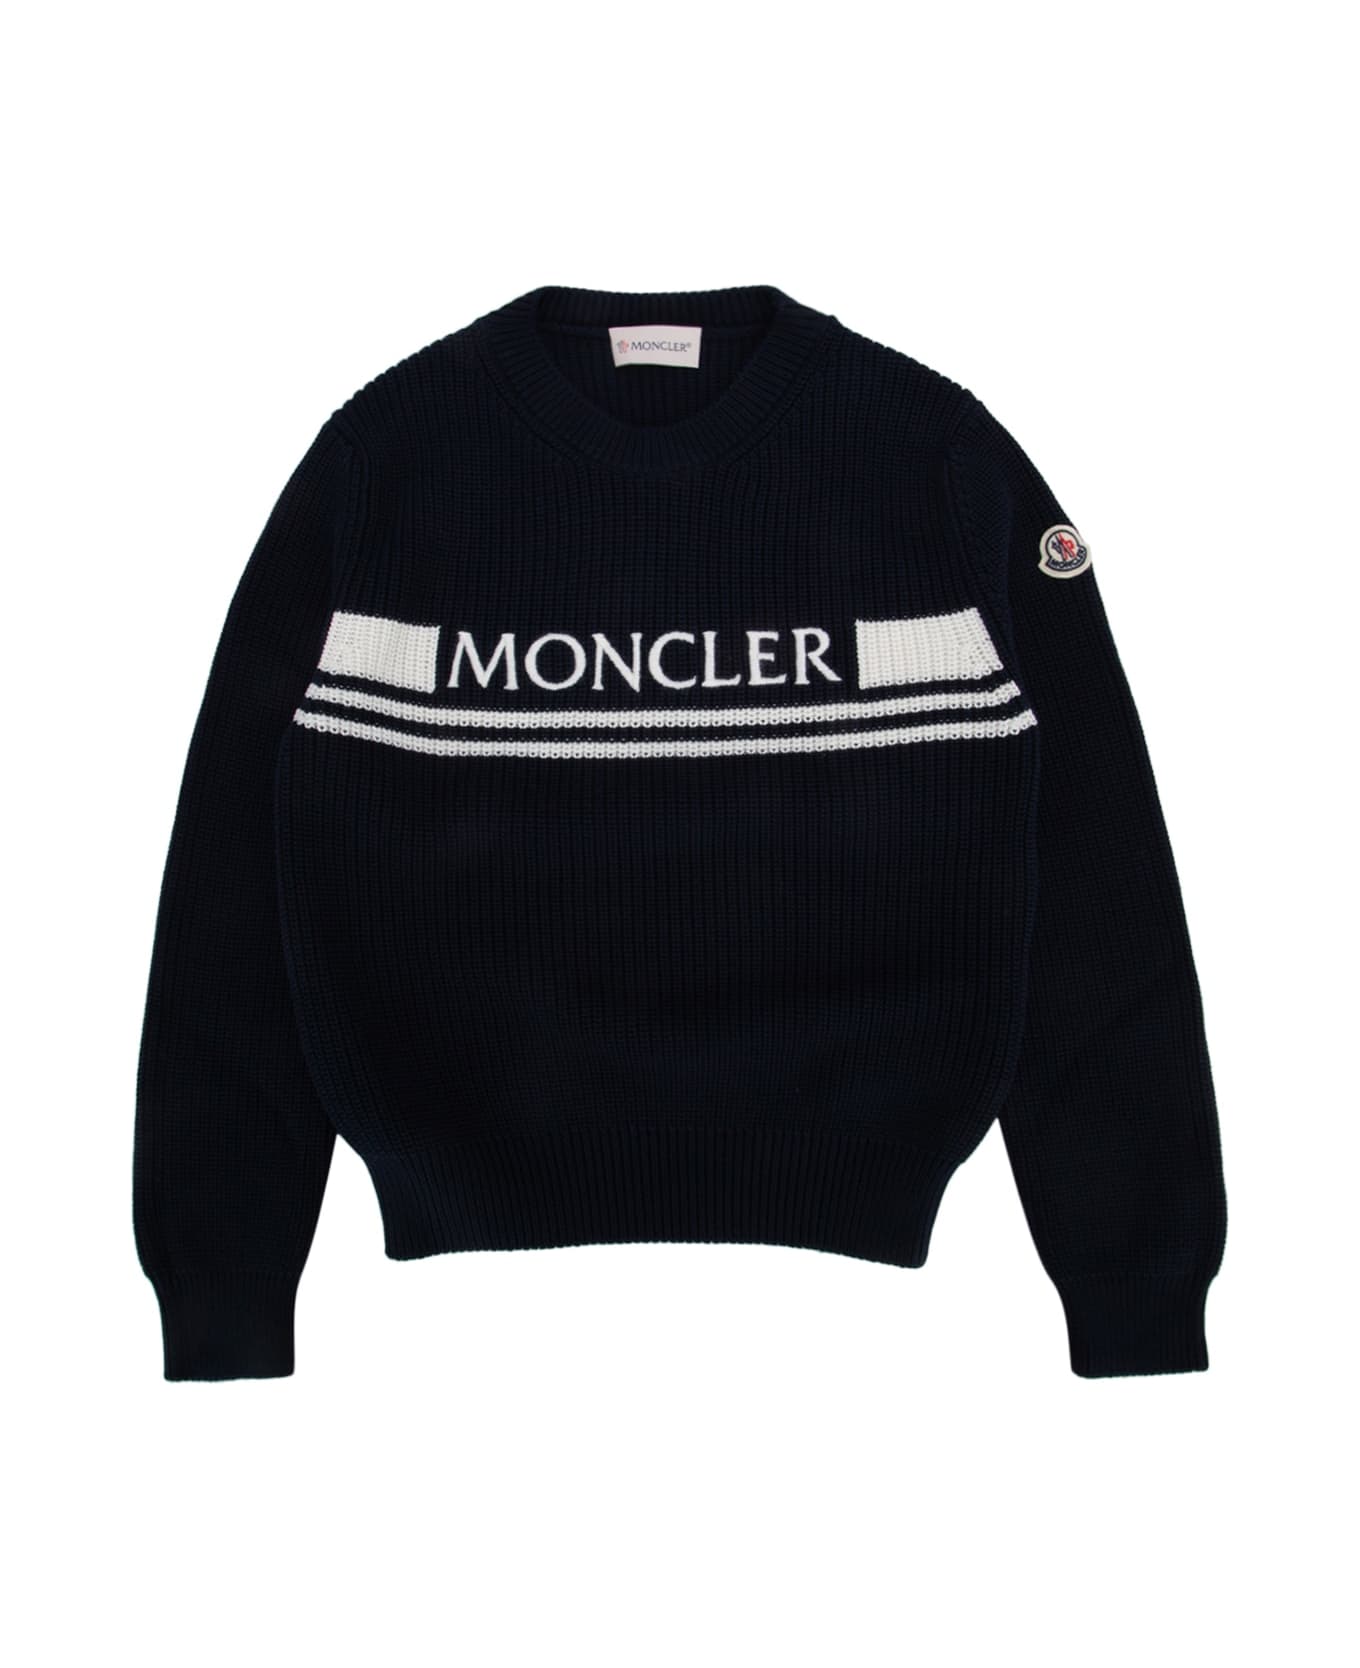 Moncler Maglione - 772